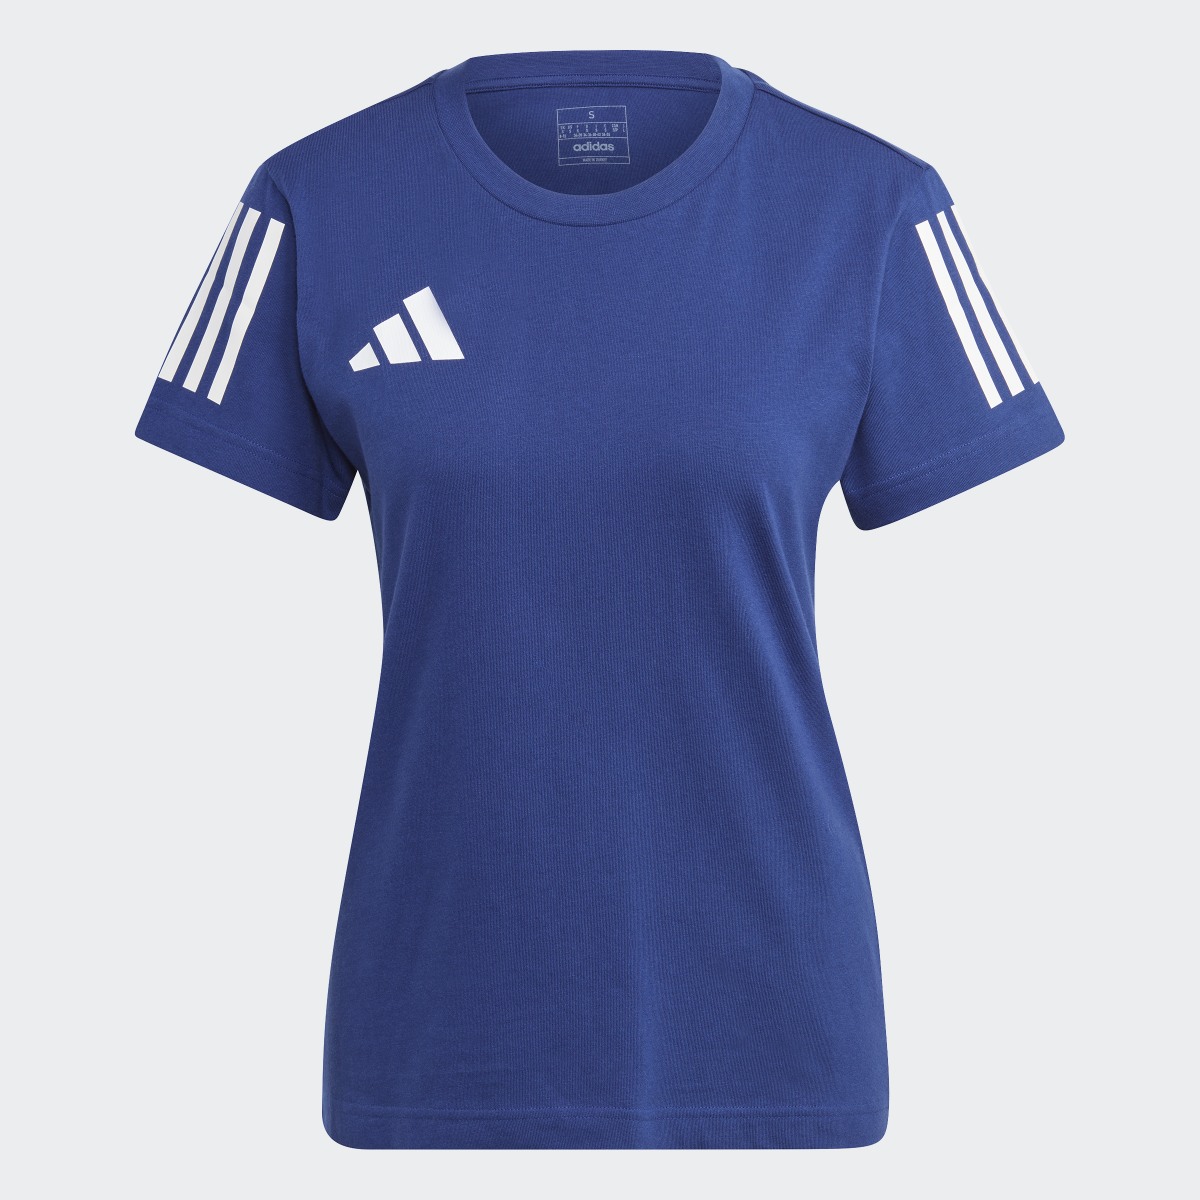 Adidas Frankreich Cotton Graphic T-Shirt. 5